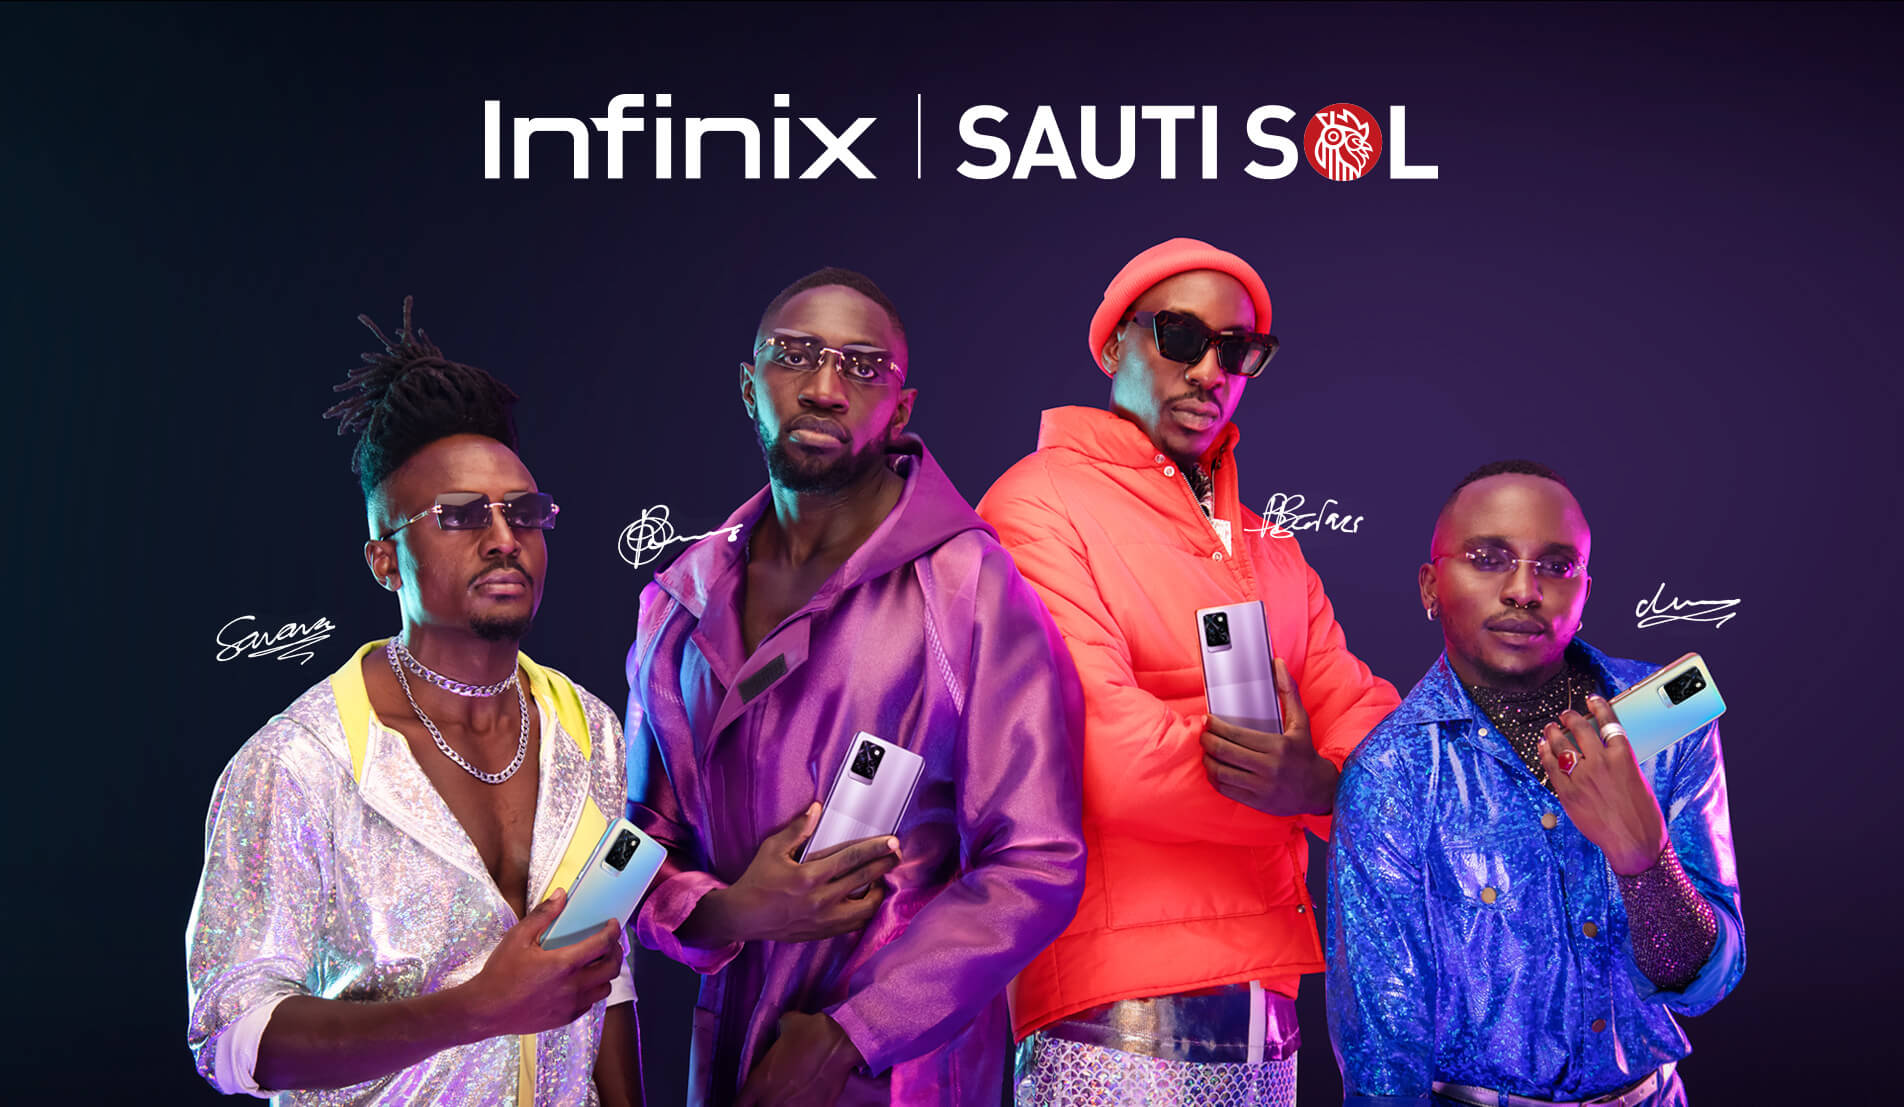 Infinix unveils Sauti Sol as its Brand Ambassadors